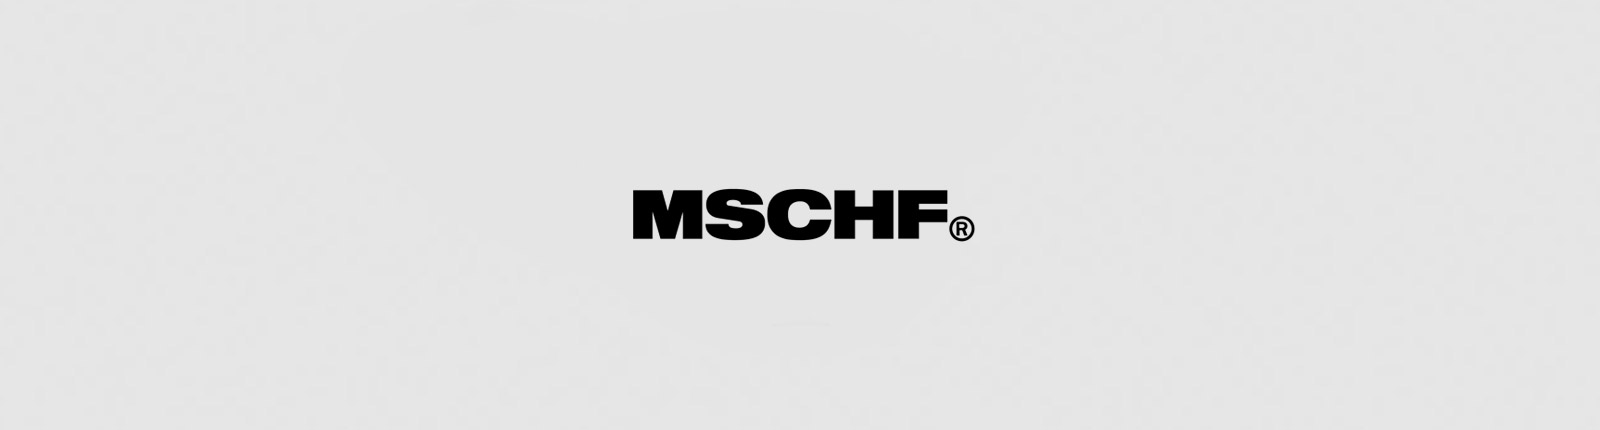 MSCHF Logo